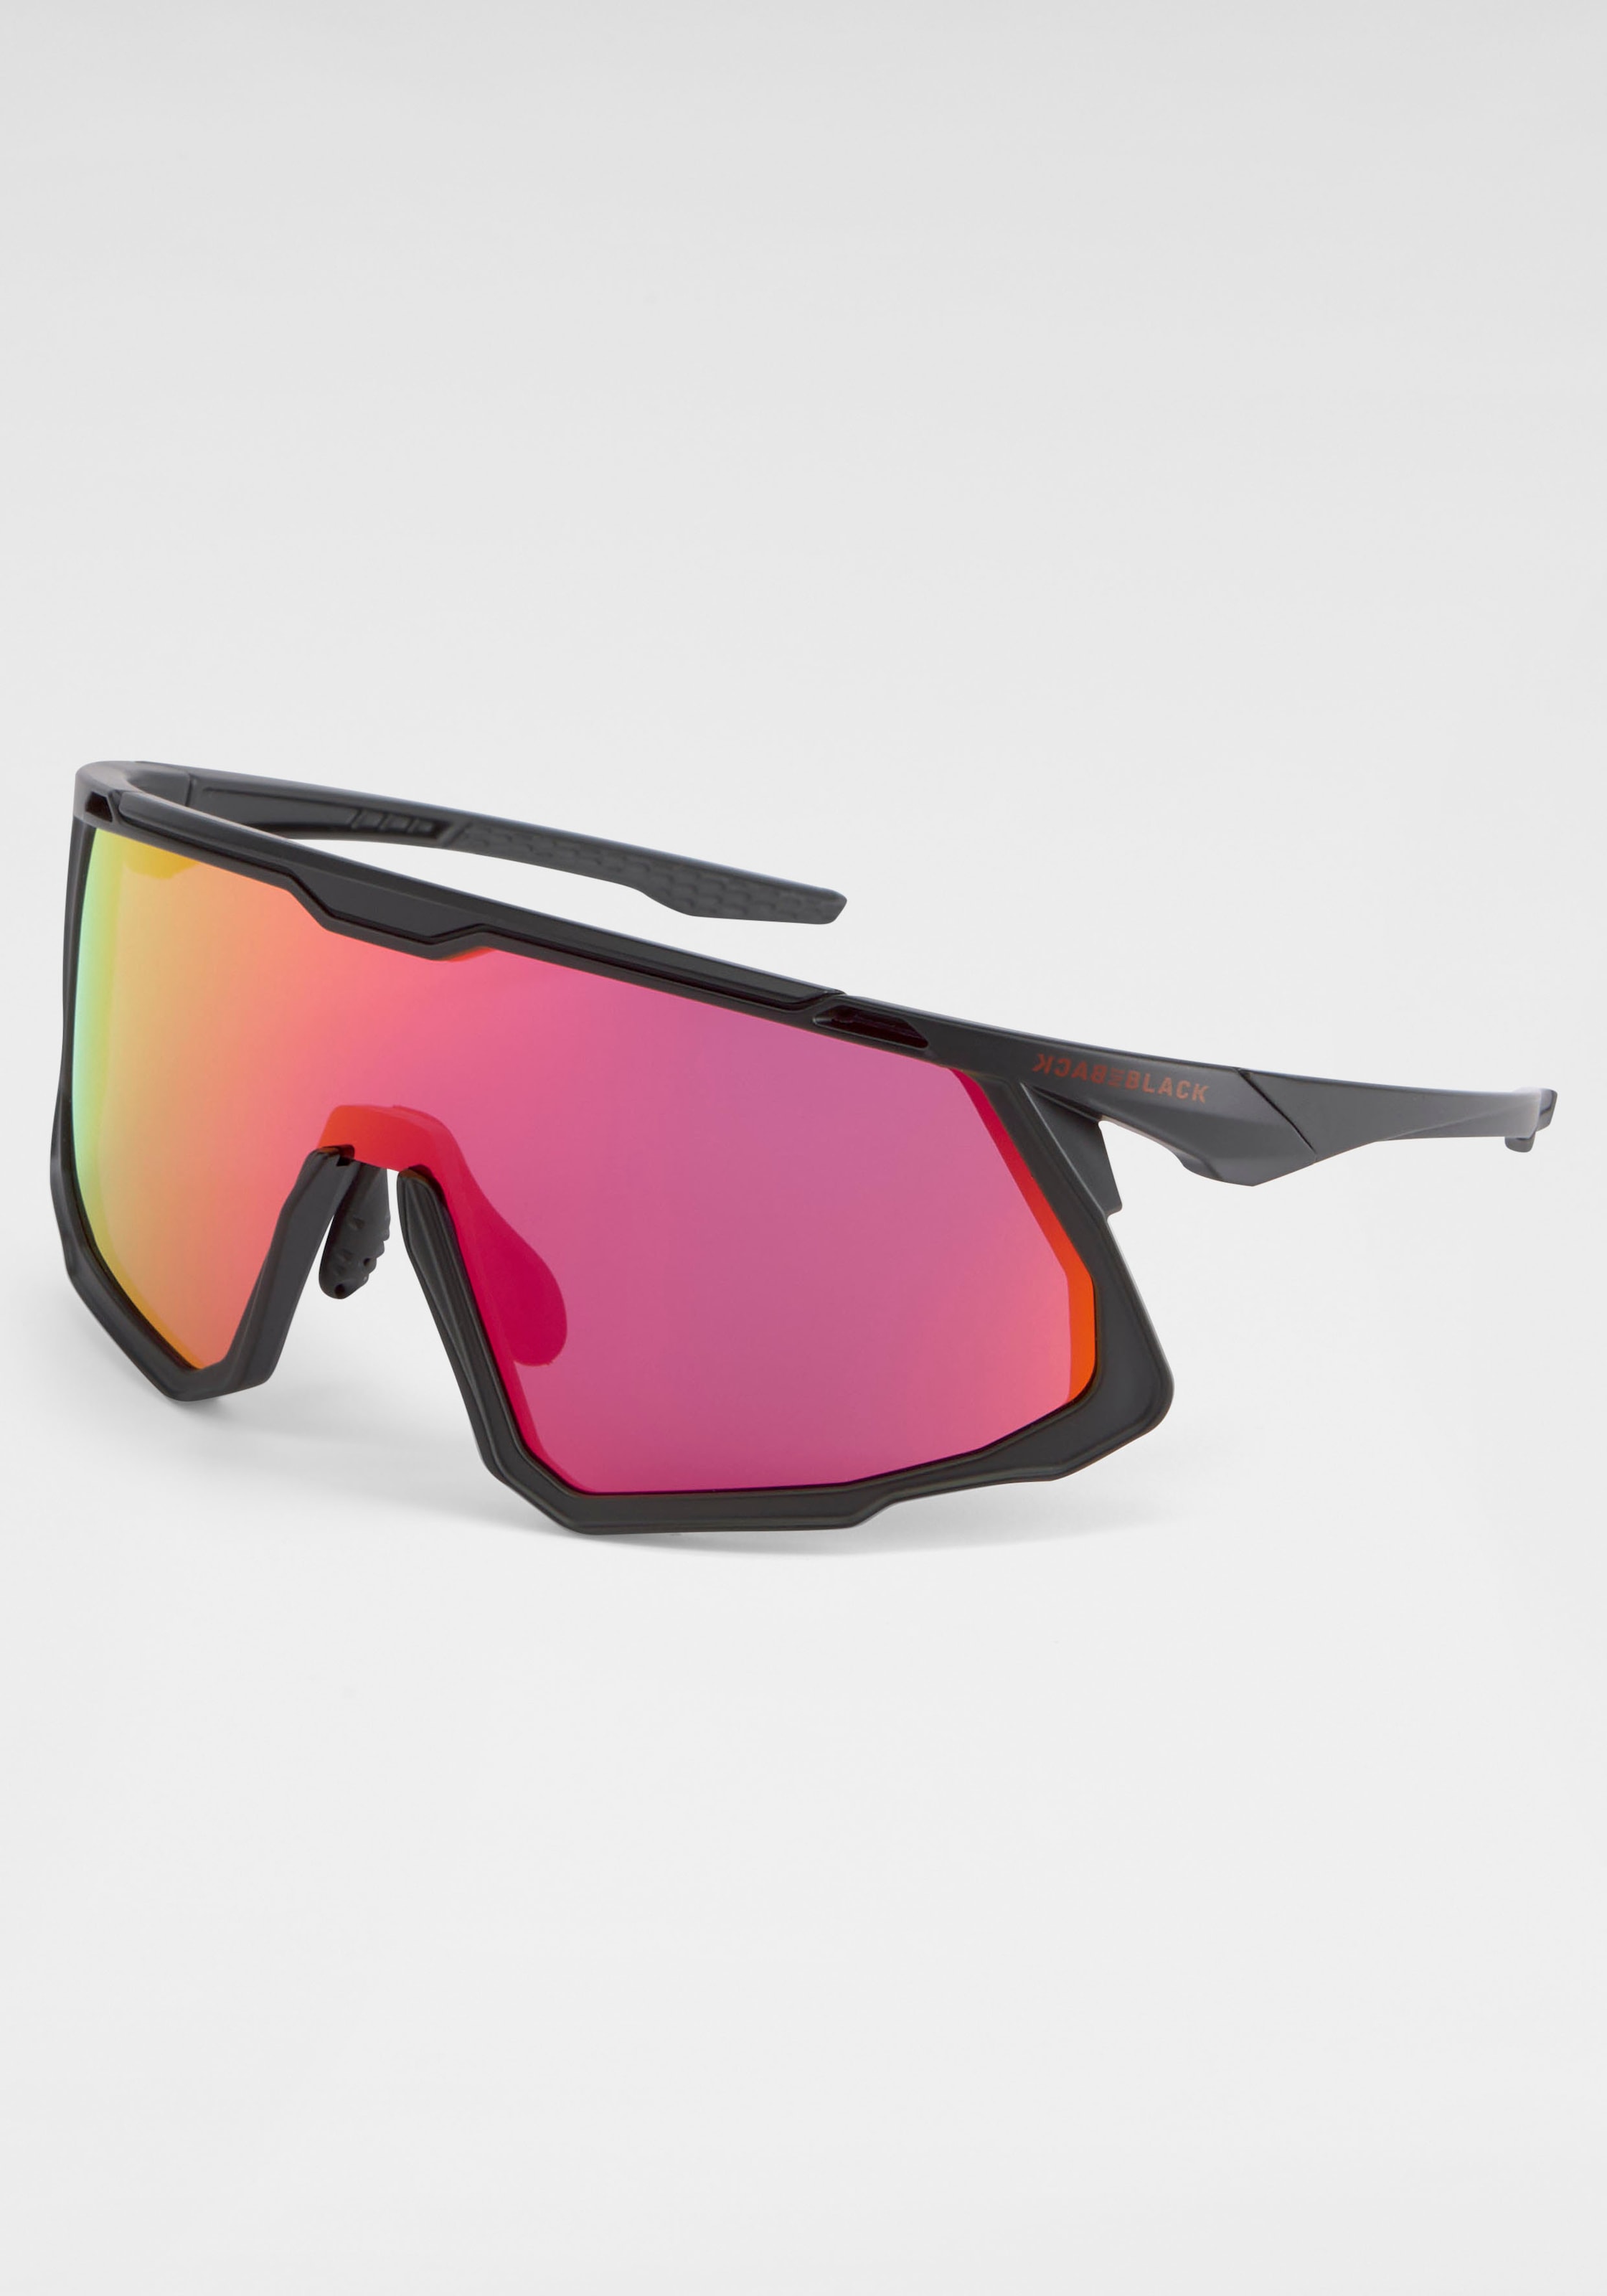 BACK IN BLACK Eyewear Sonnenbrille, gebogene Form acheter